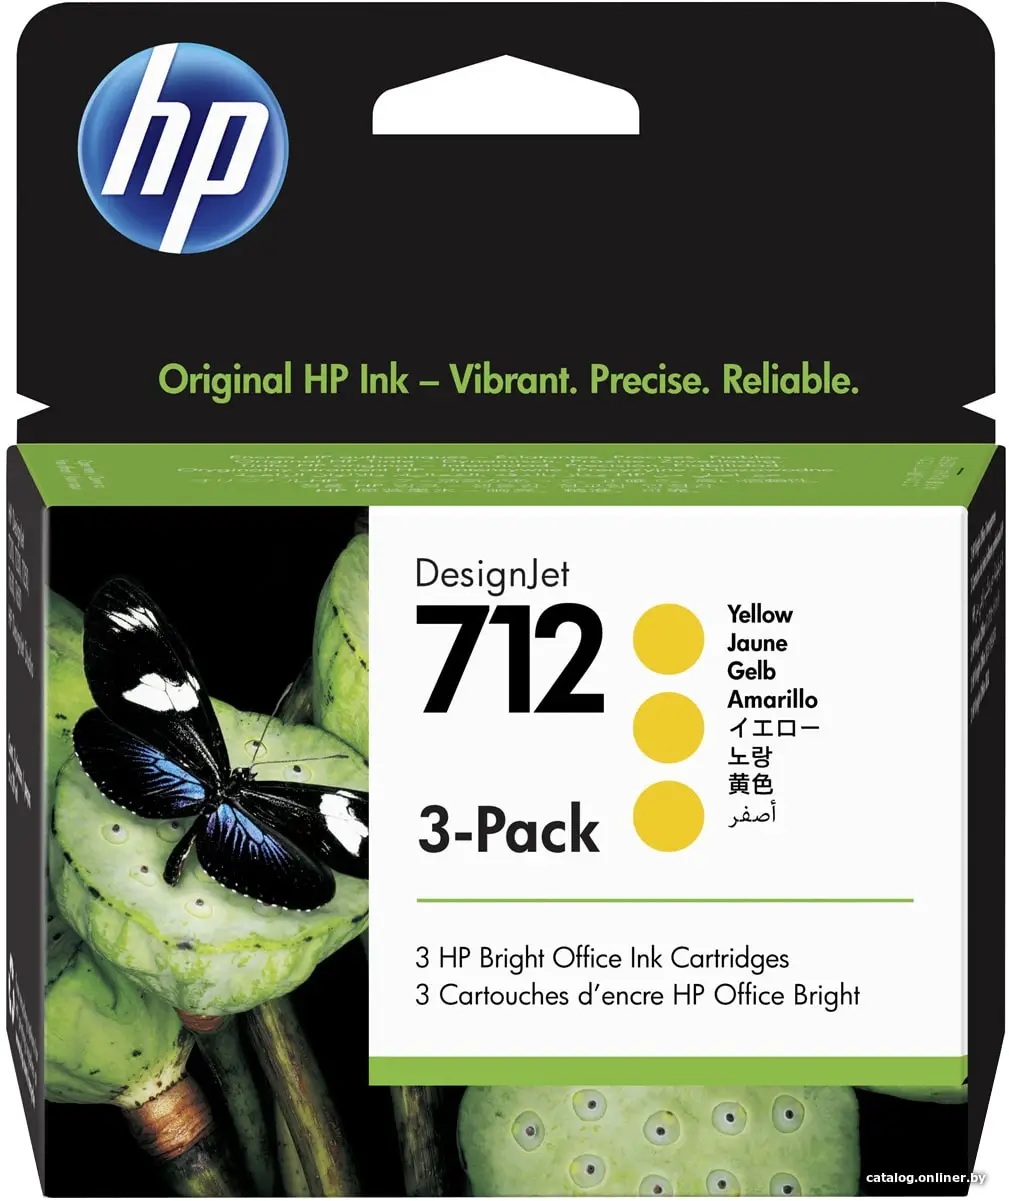 Купить HP 712 3-Pack 29-ml Yellow DesignJet Ink Cartridge картридж, цена, опт и розница